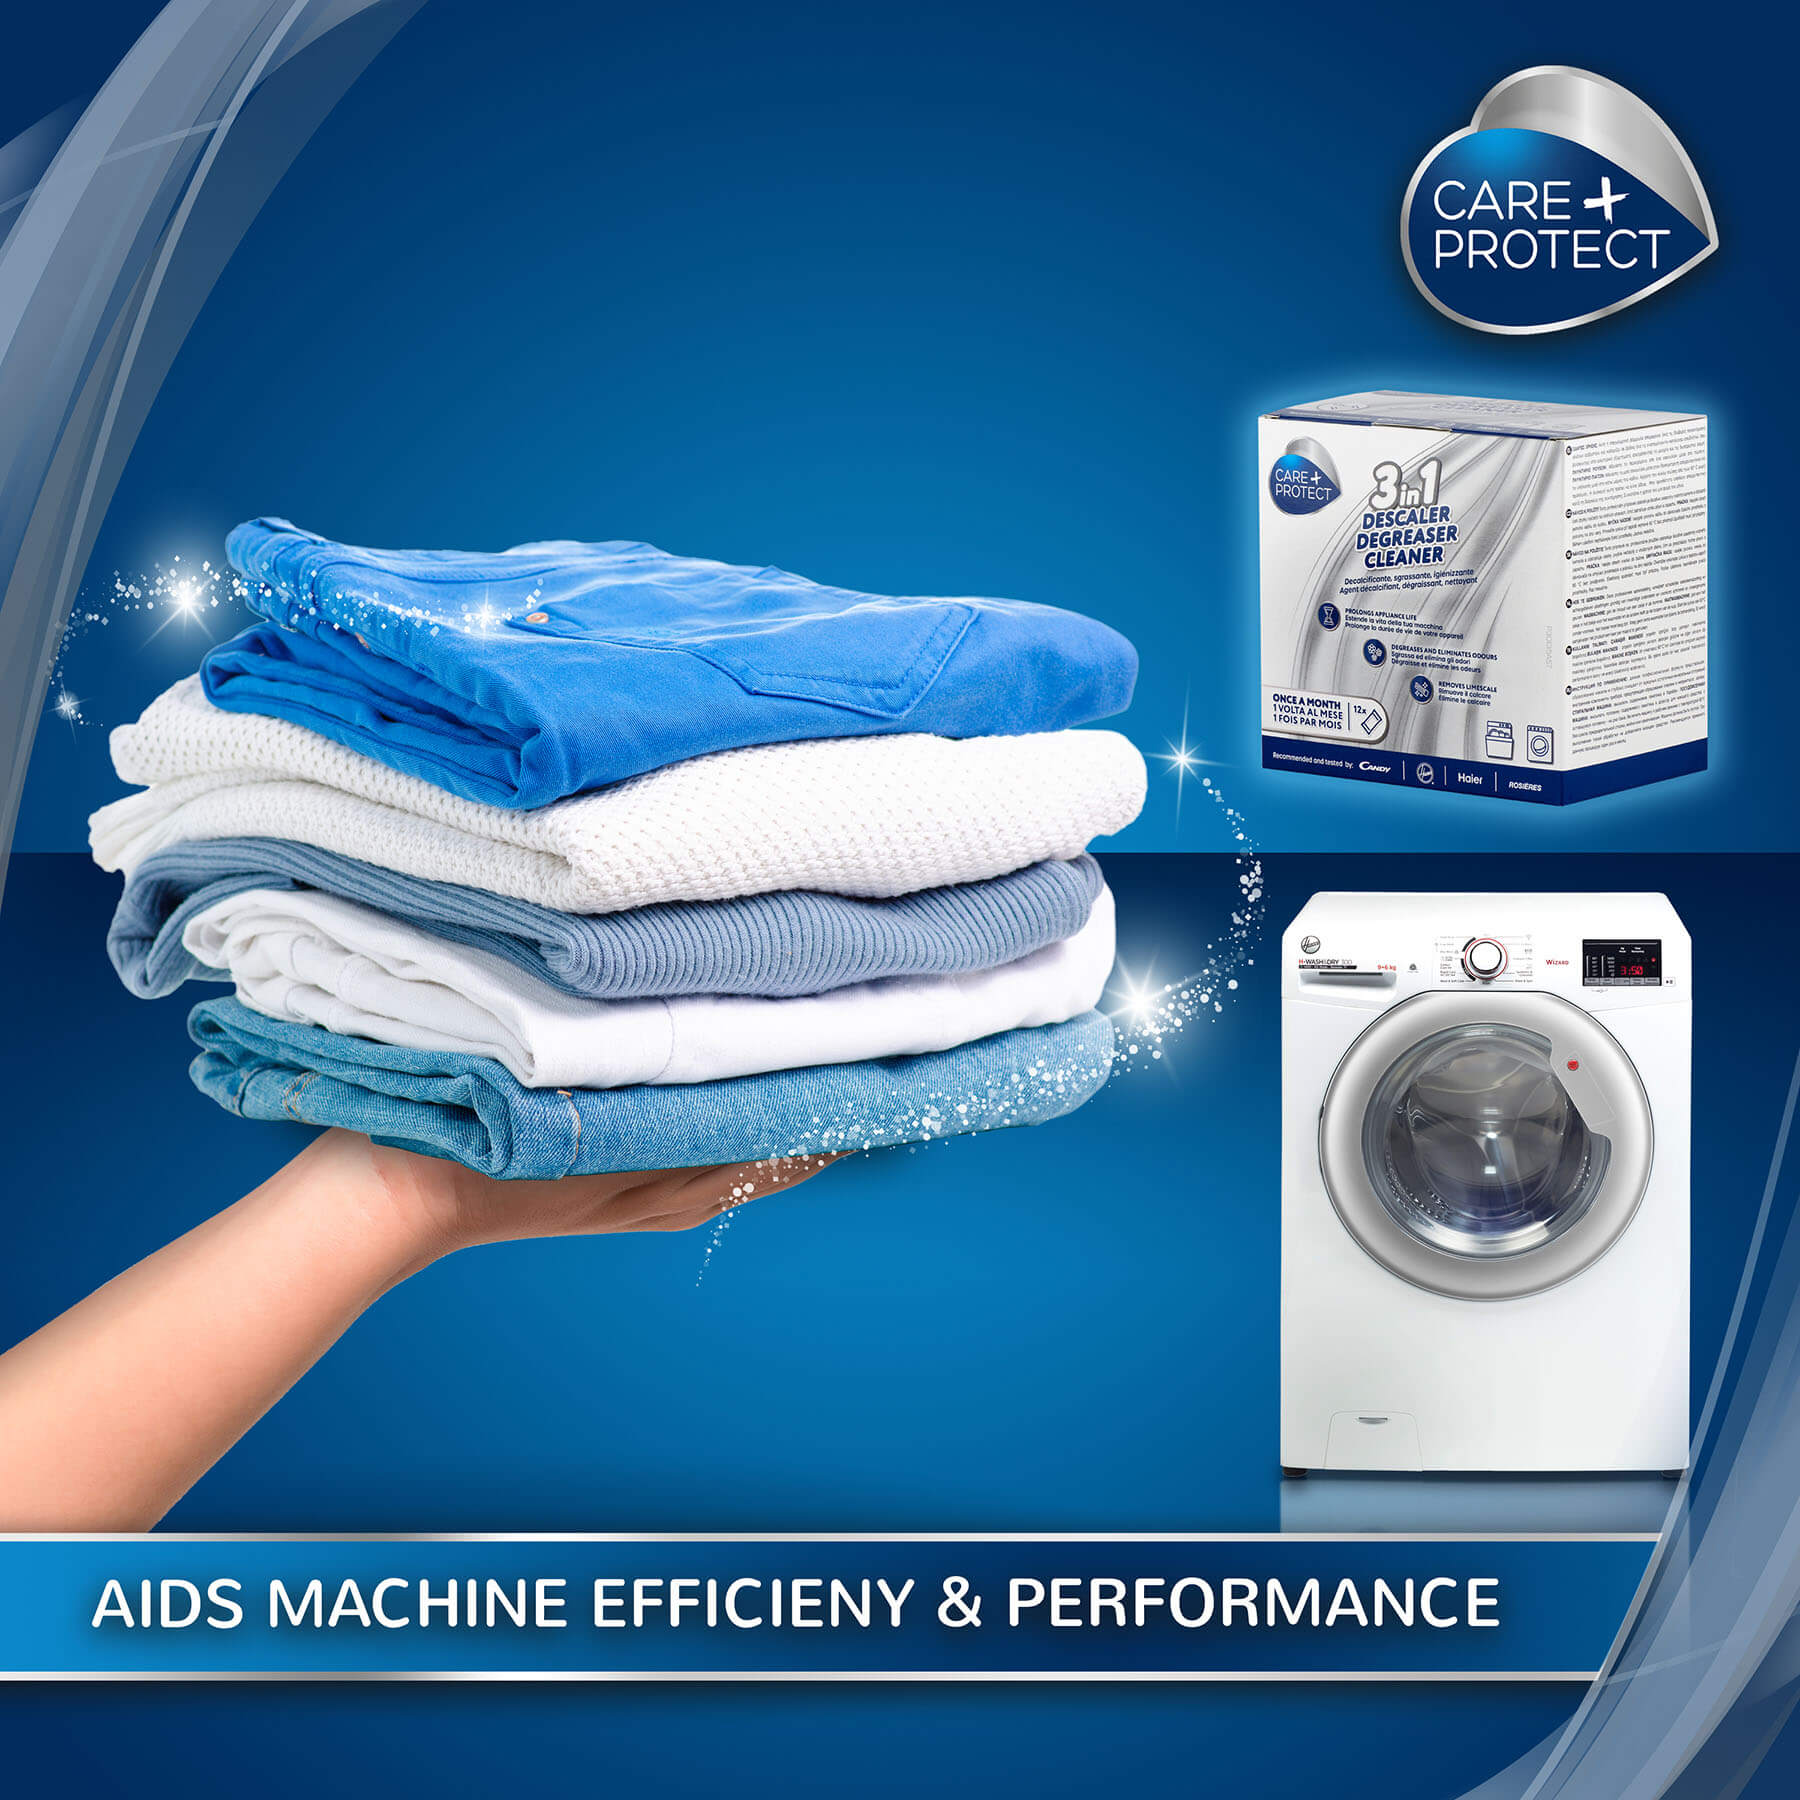 Adis Machine Efficieny & Performance